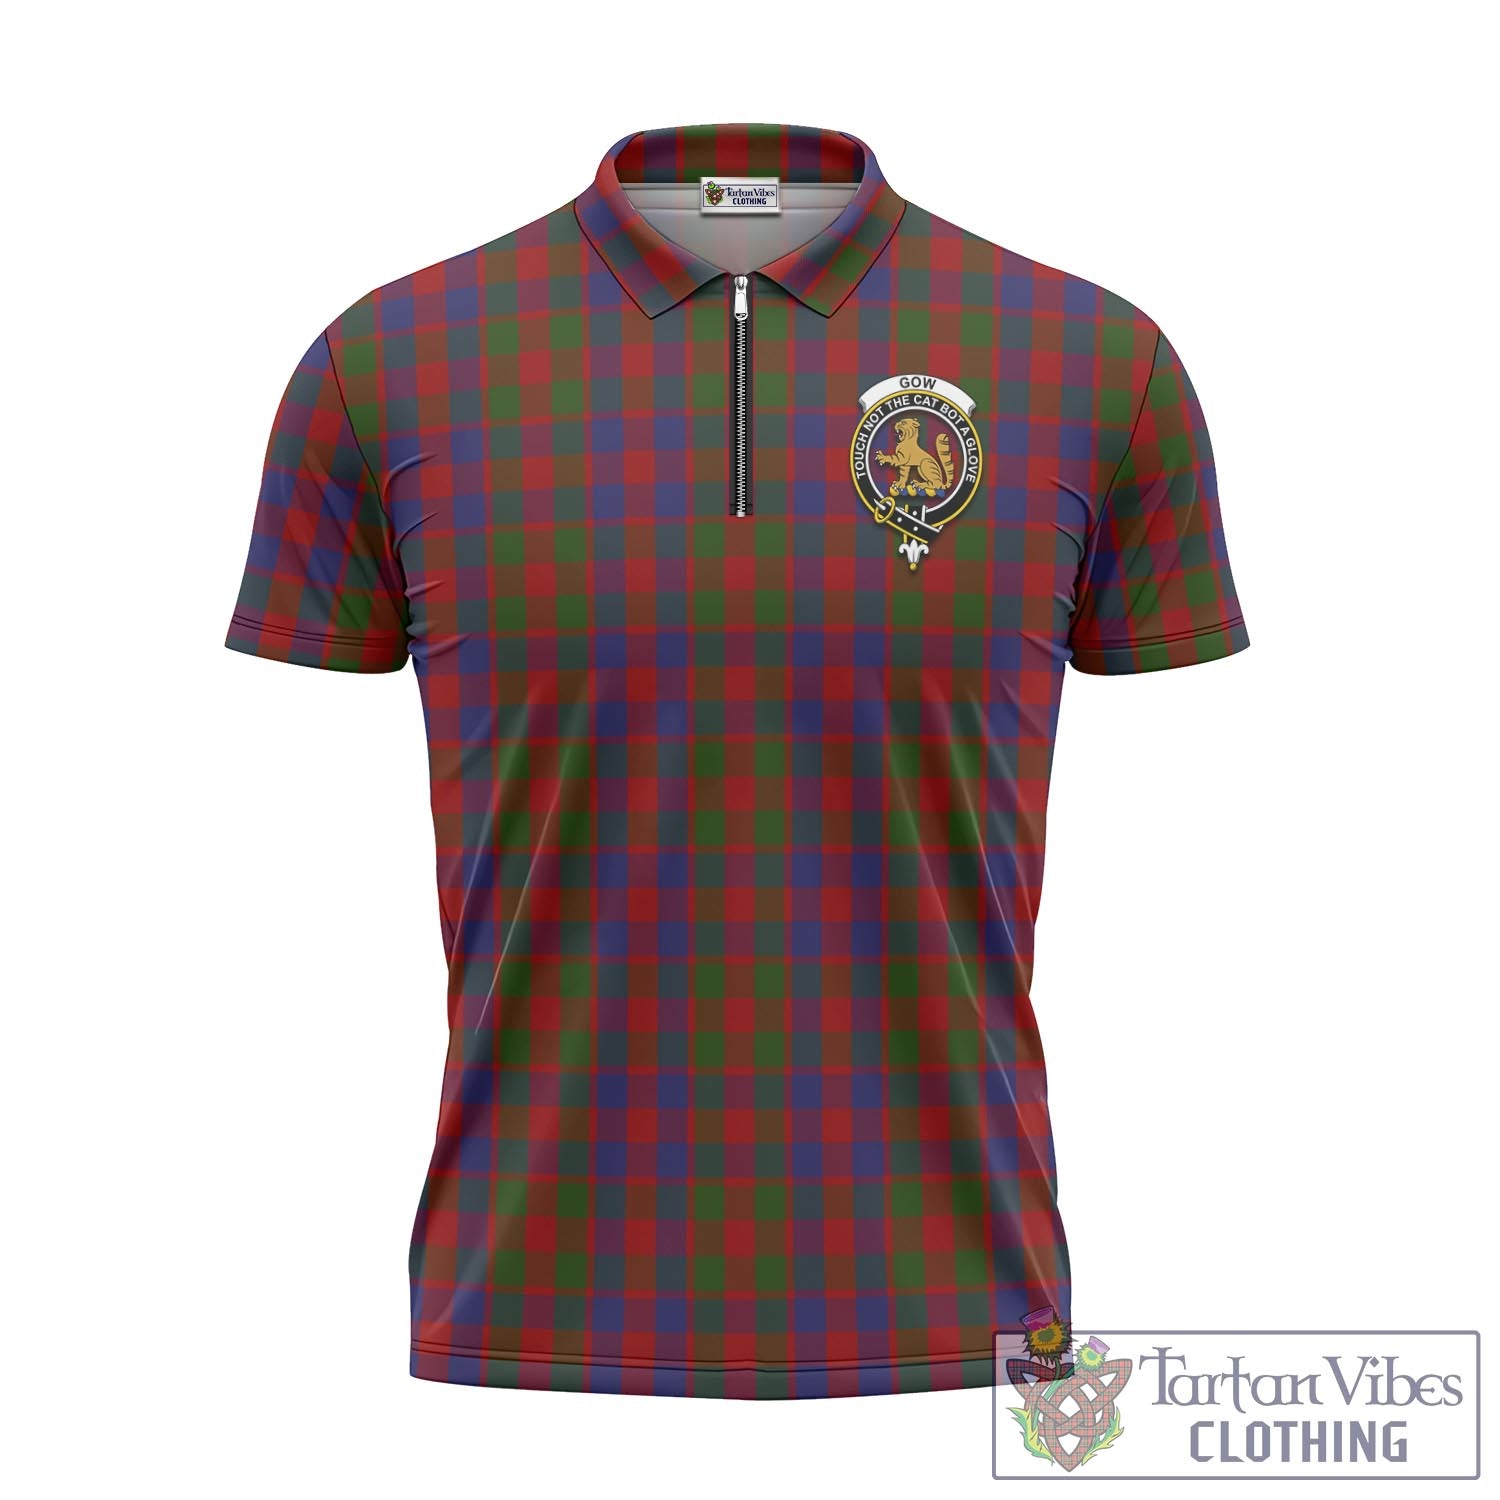 Tartan Vibes Clothing Gow Tartan Zipper Polo Shirt with Family Crest